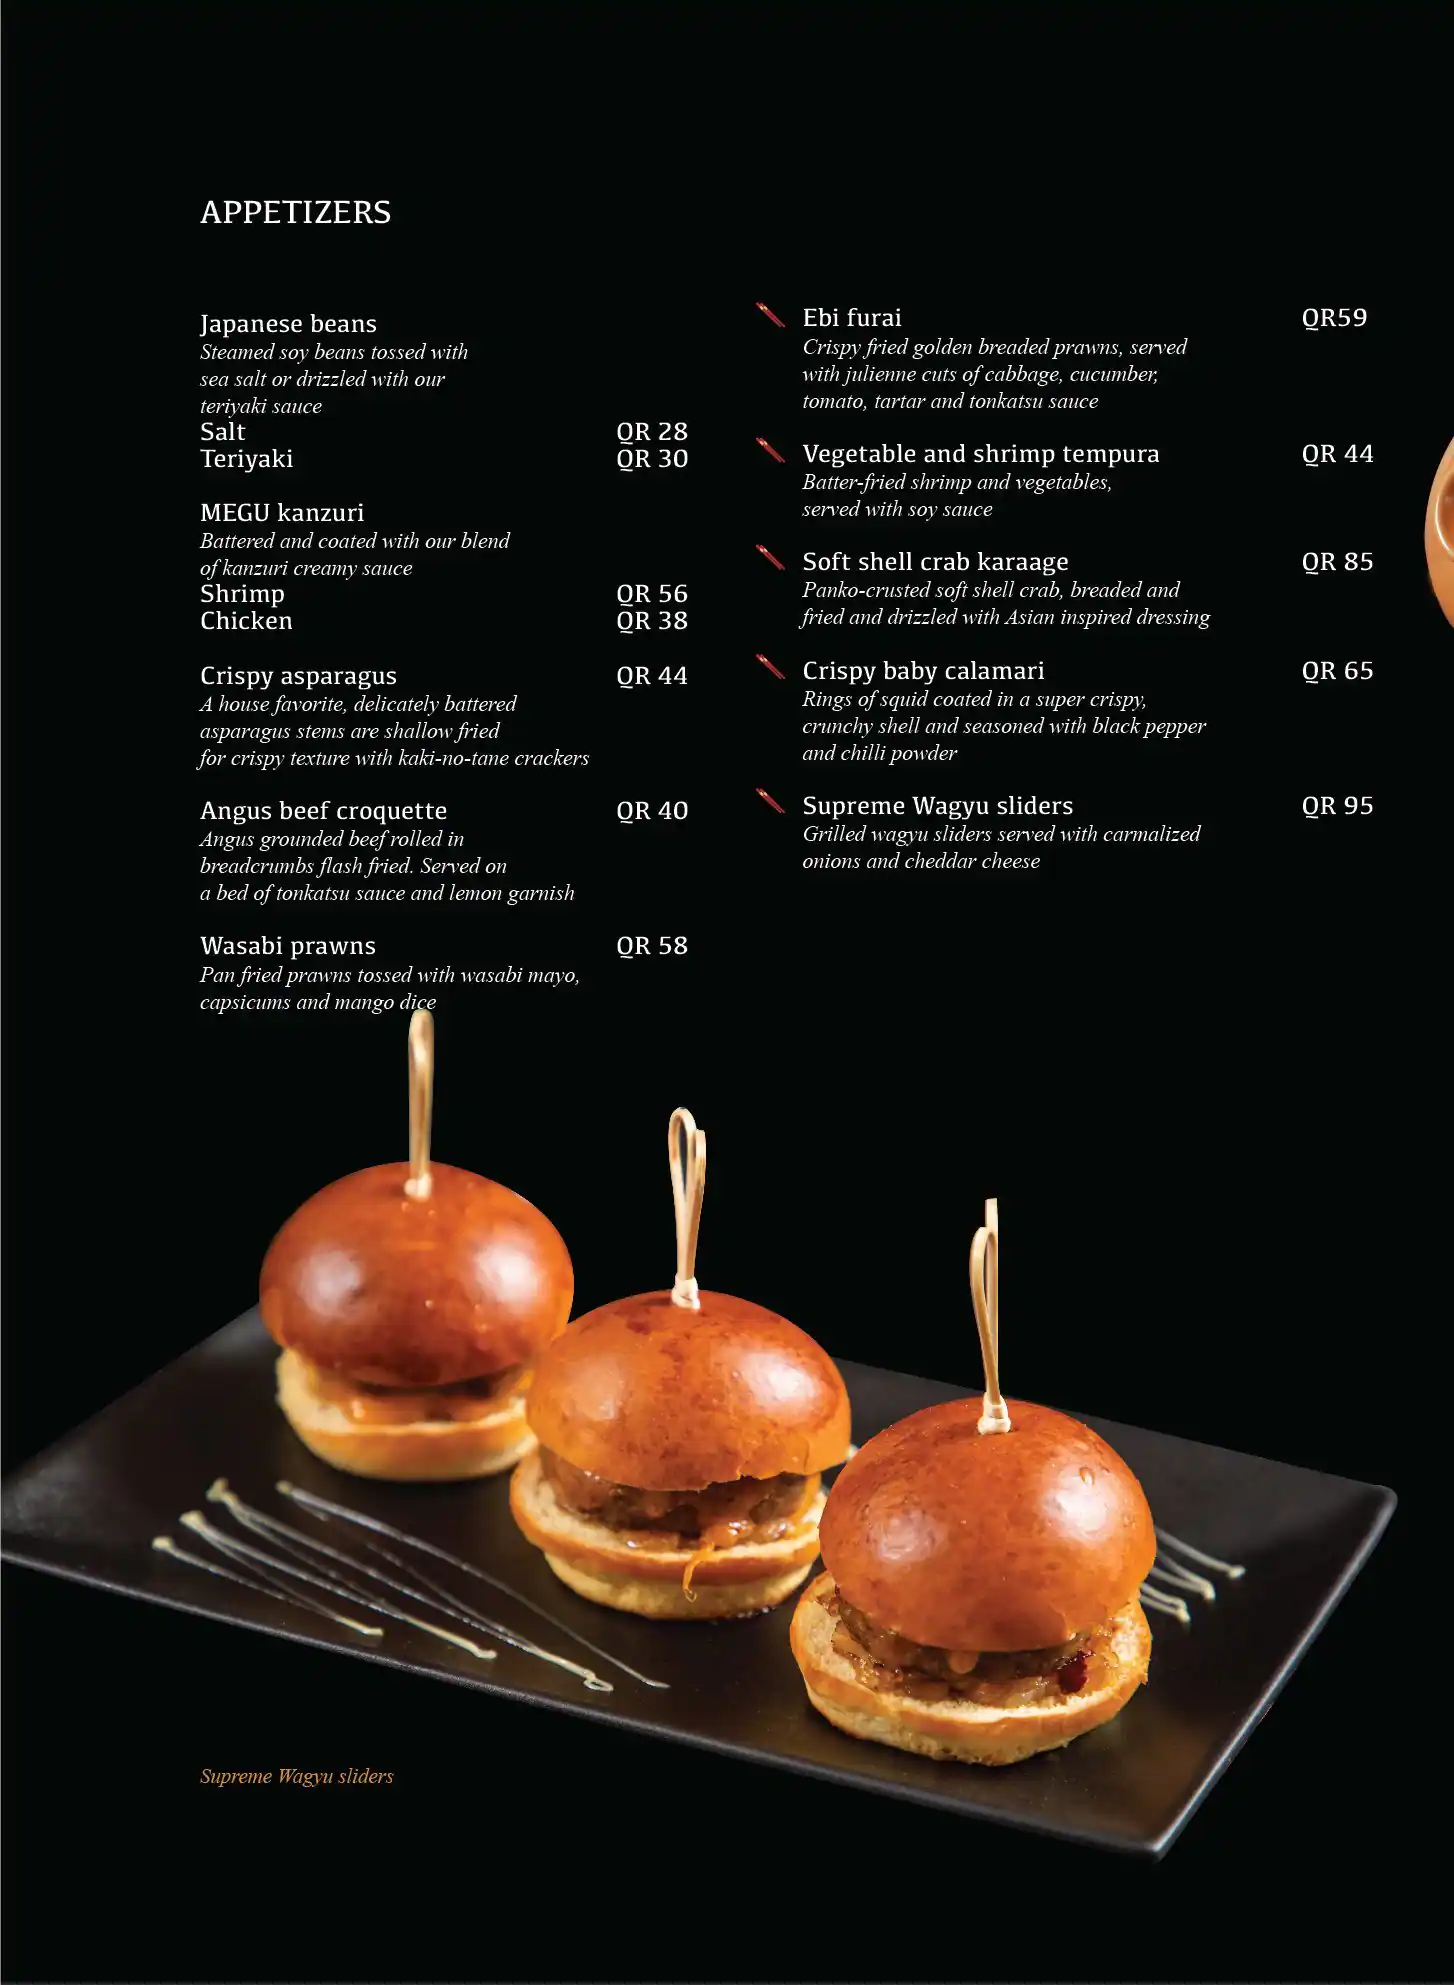 Best restaurant menu near Hotel Crystal Palace Musheireb Doha